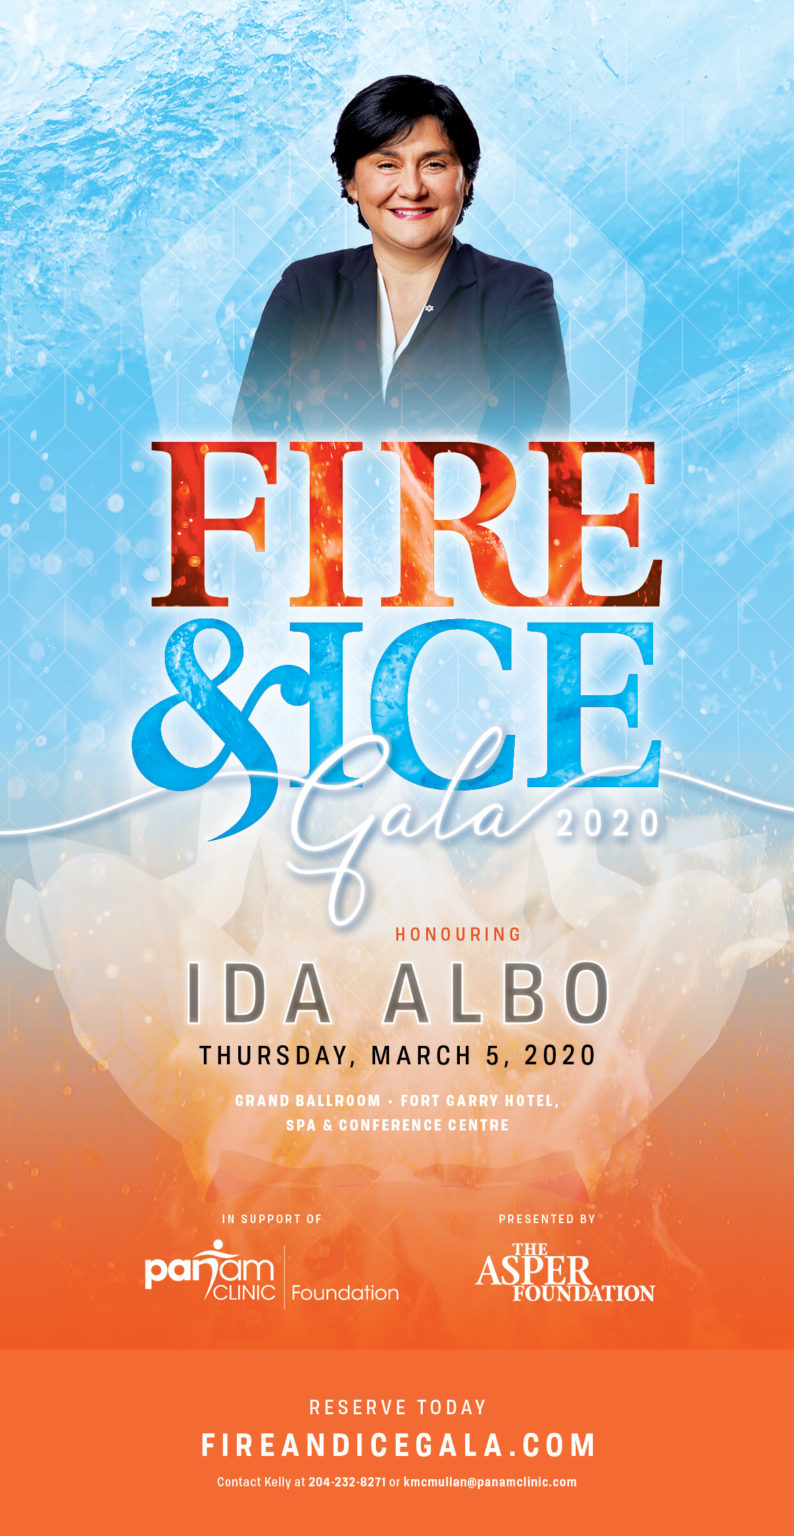 Fire & Ice Gala 2020 Pan Am Clinic